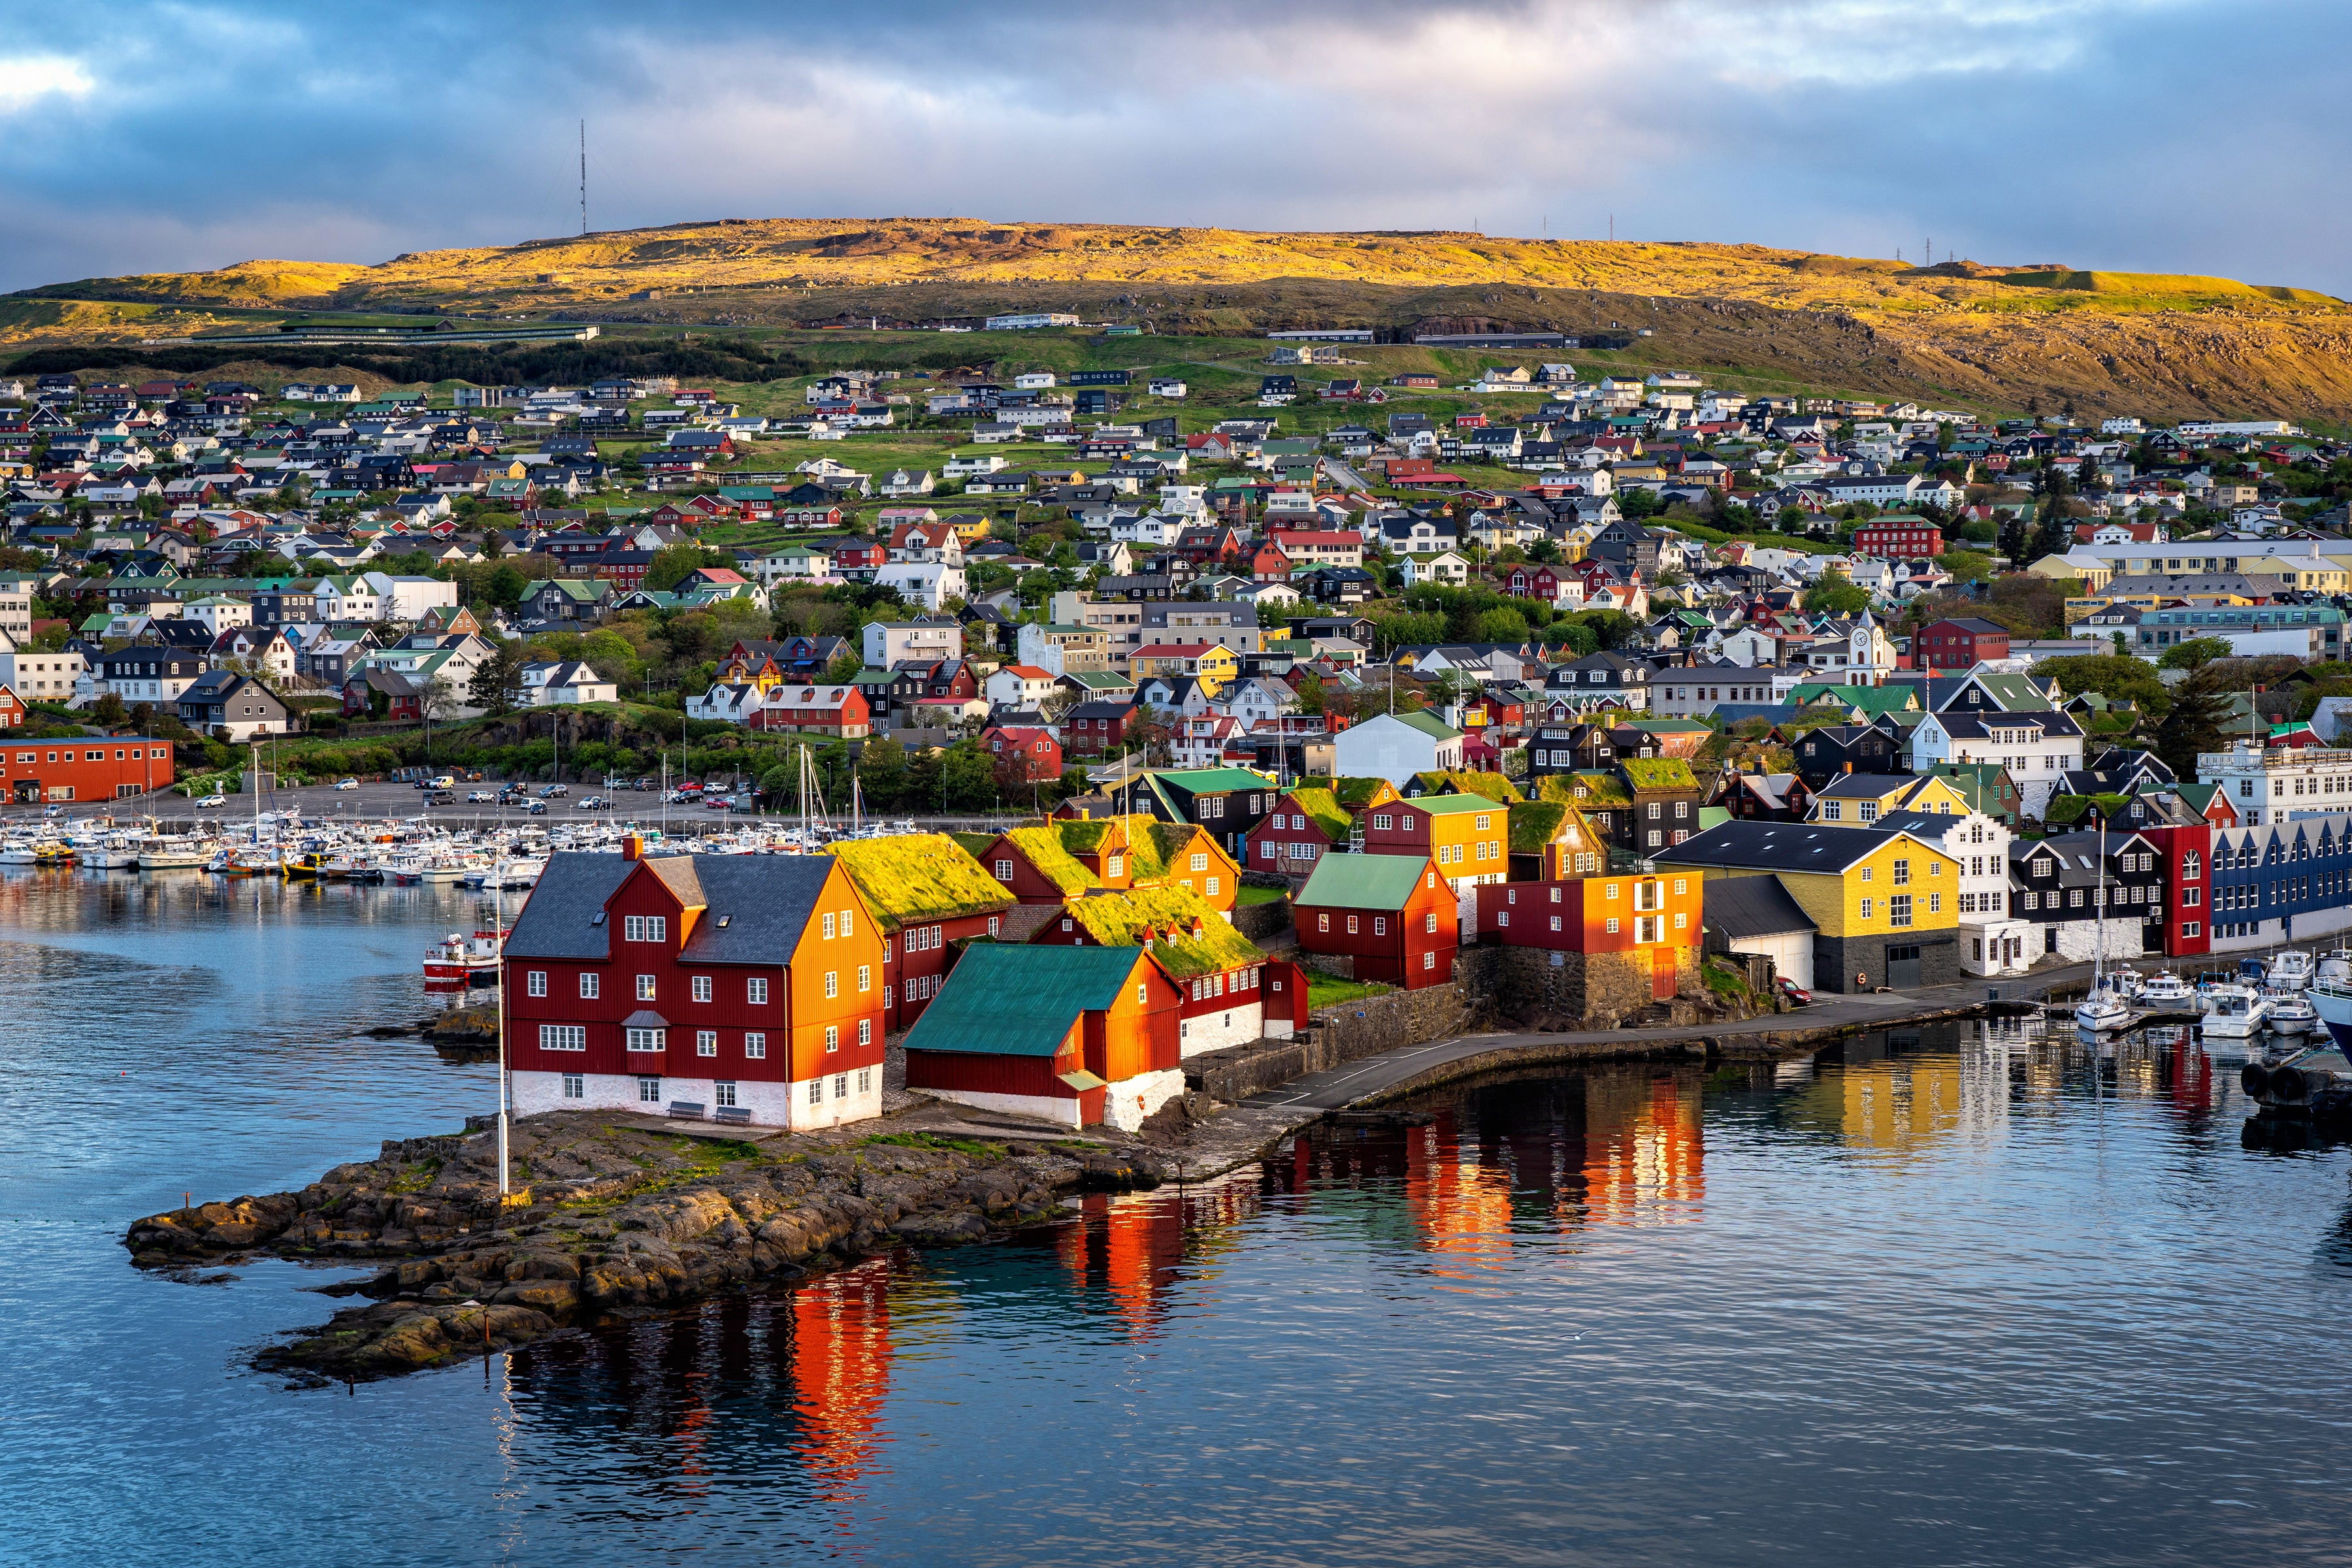 Tórshavn, the quaint and compact capital of the Faroe Islands